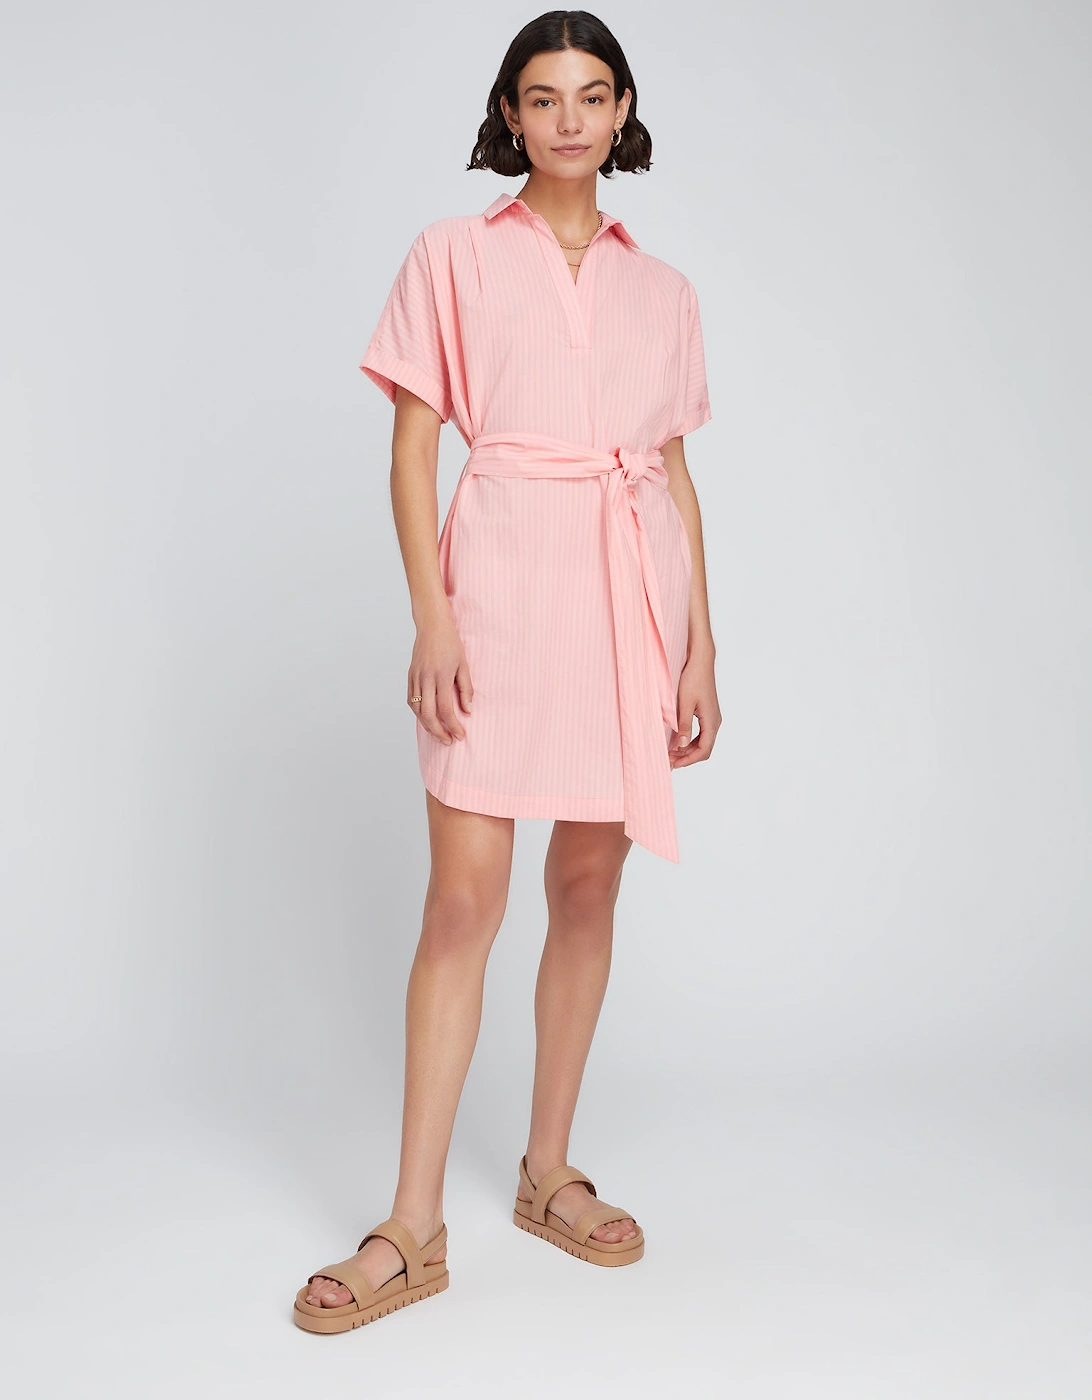 Diantha Shirt Dress in Pink, 5 of 4